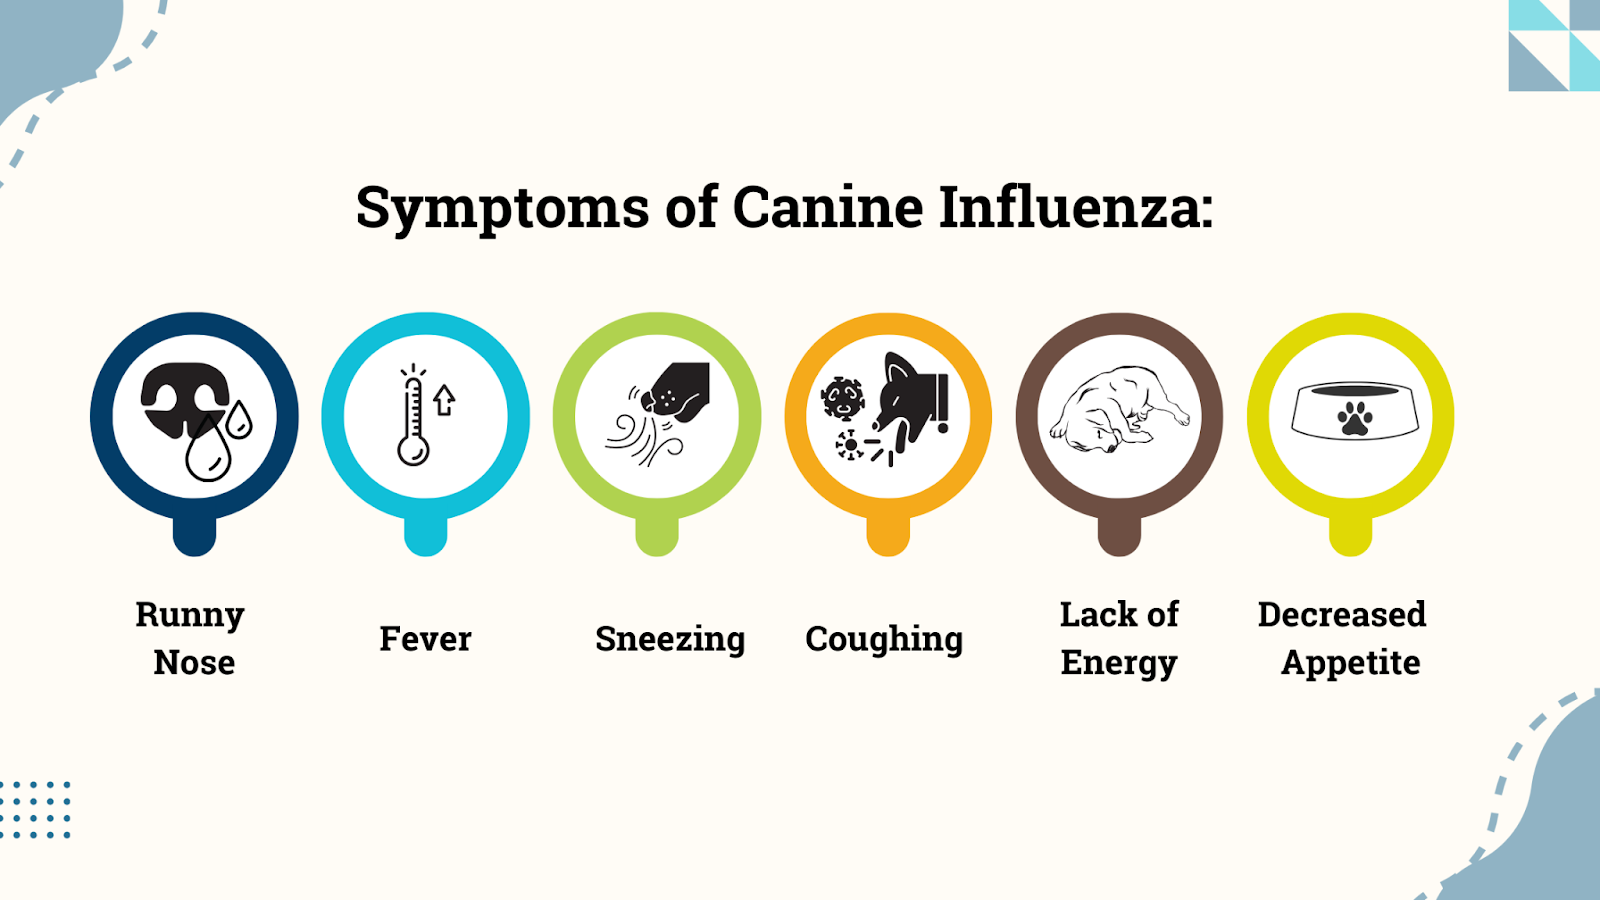 Symptoms of canine influenza